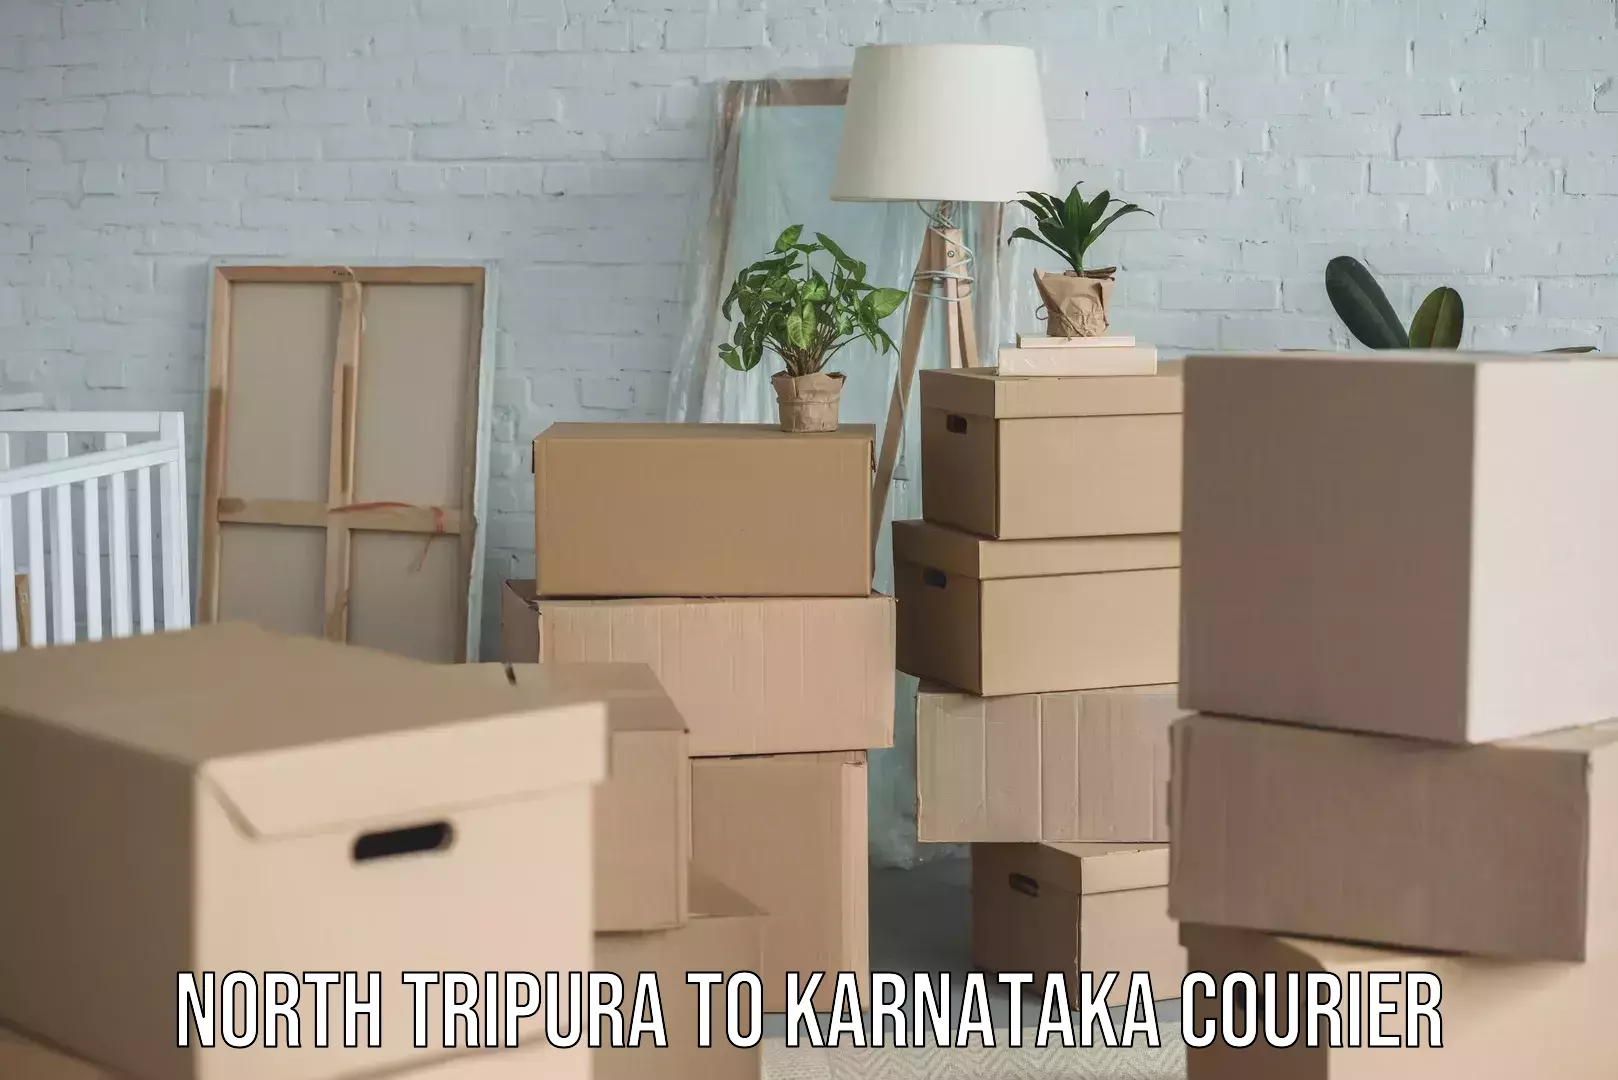 Express logistics providers North Tripura to Karnataka